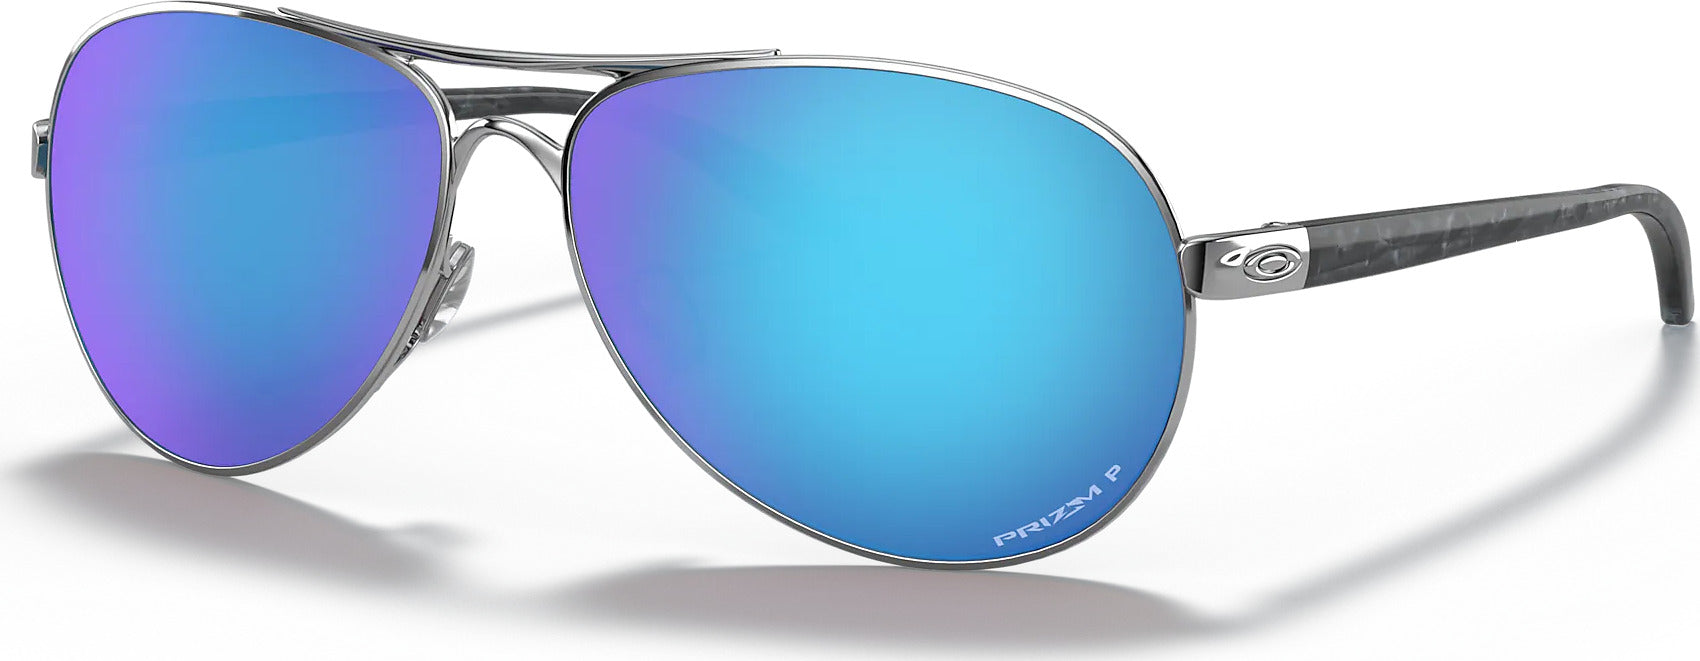 Oakley Feedback Sunglasses - Polished Chrome - Prizm Sapphire Iridium  Polarized Lens | Altitude Sports